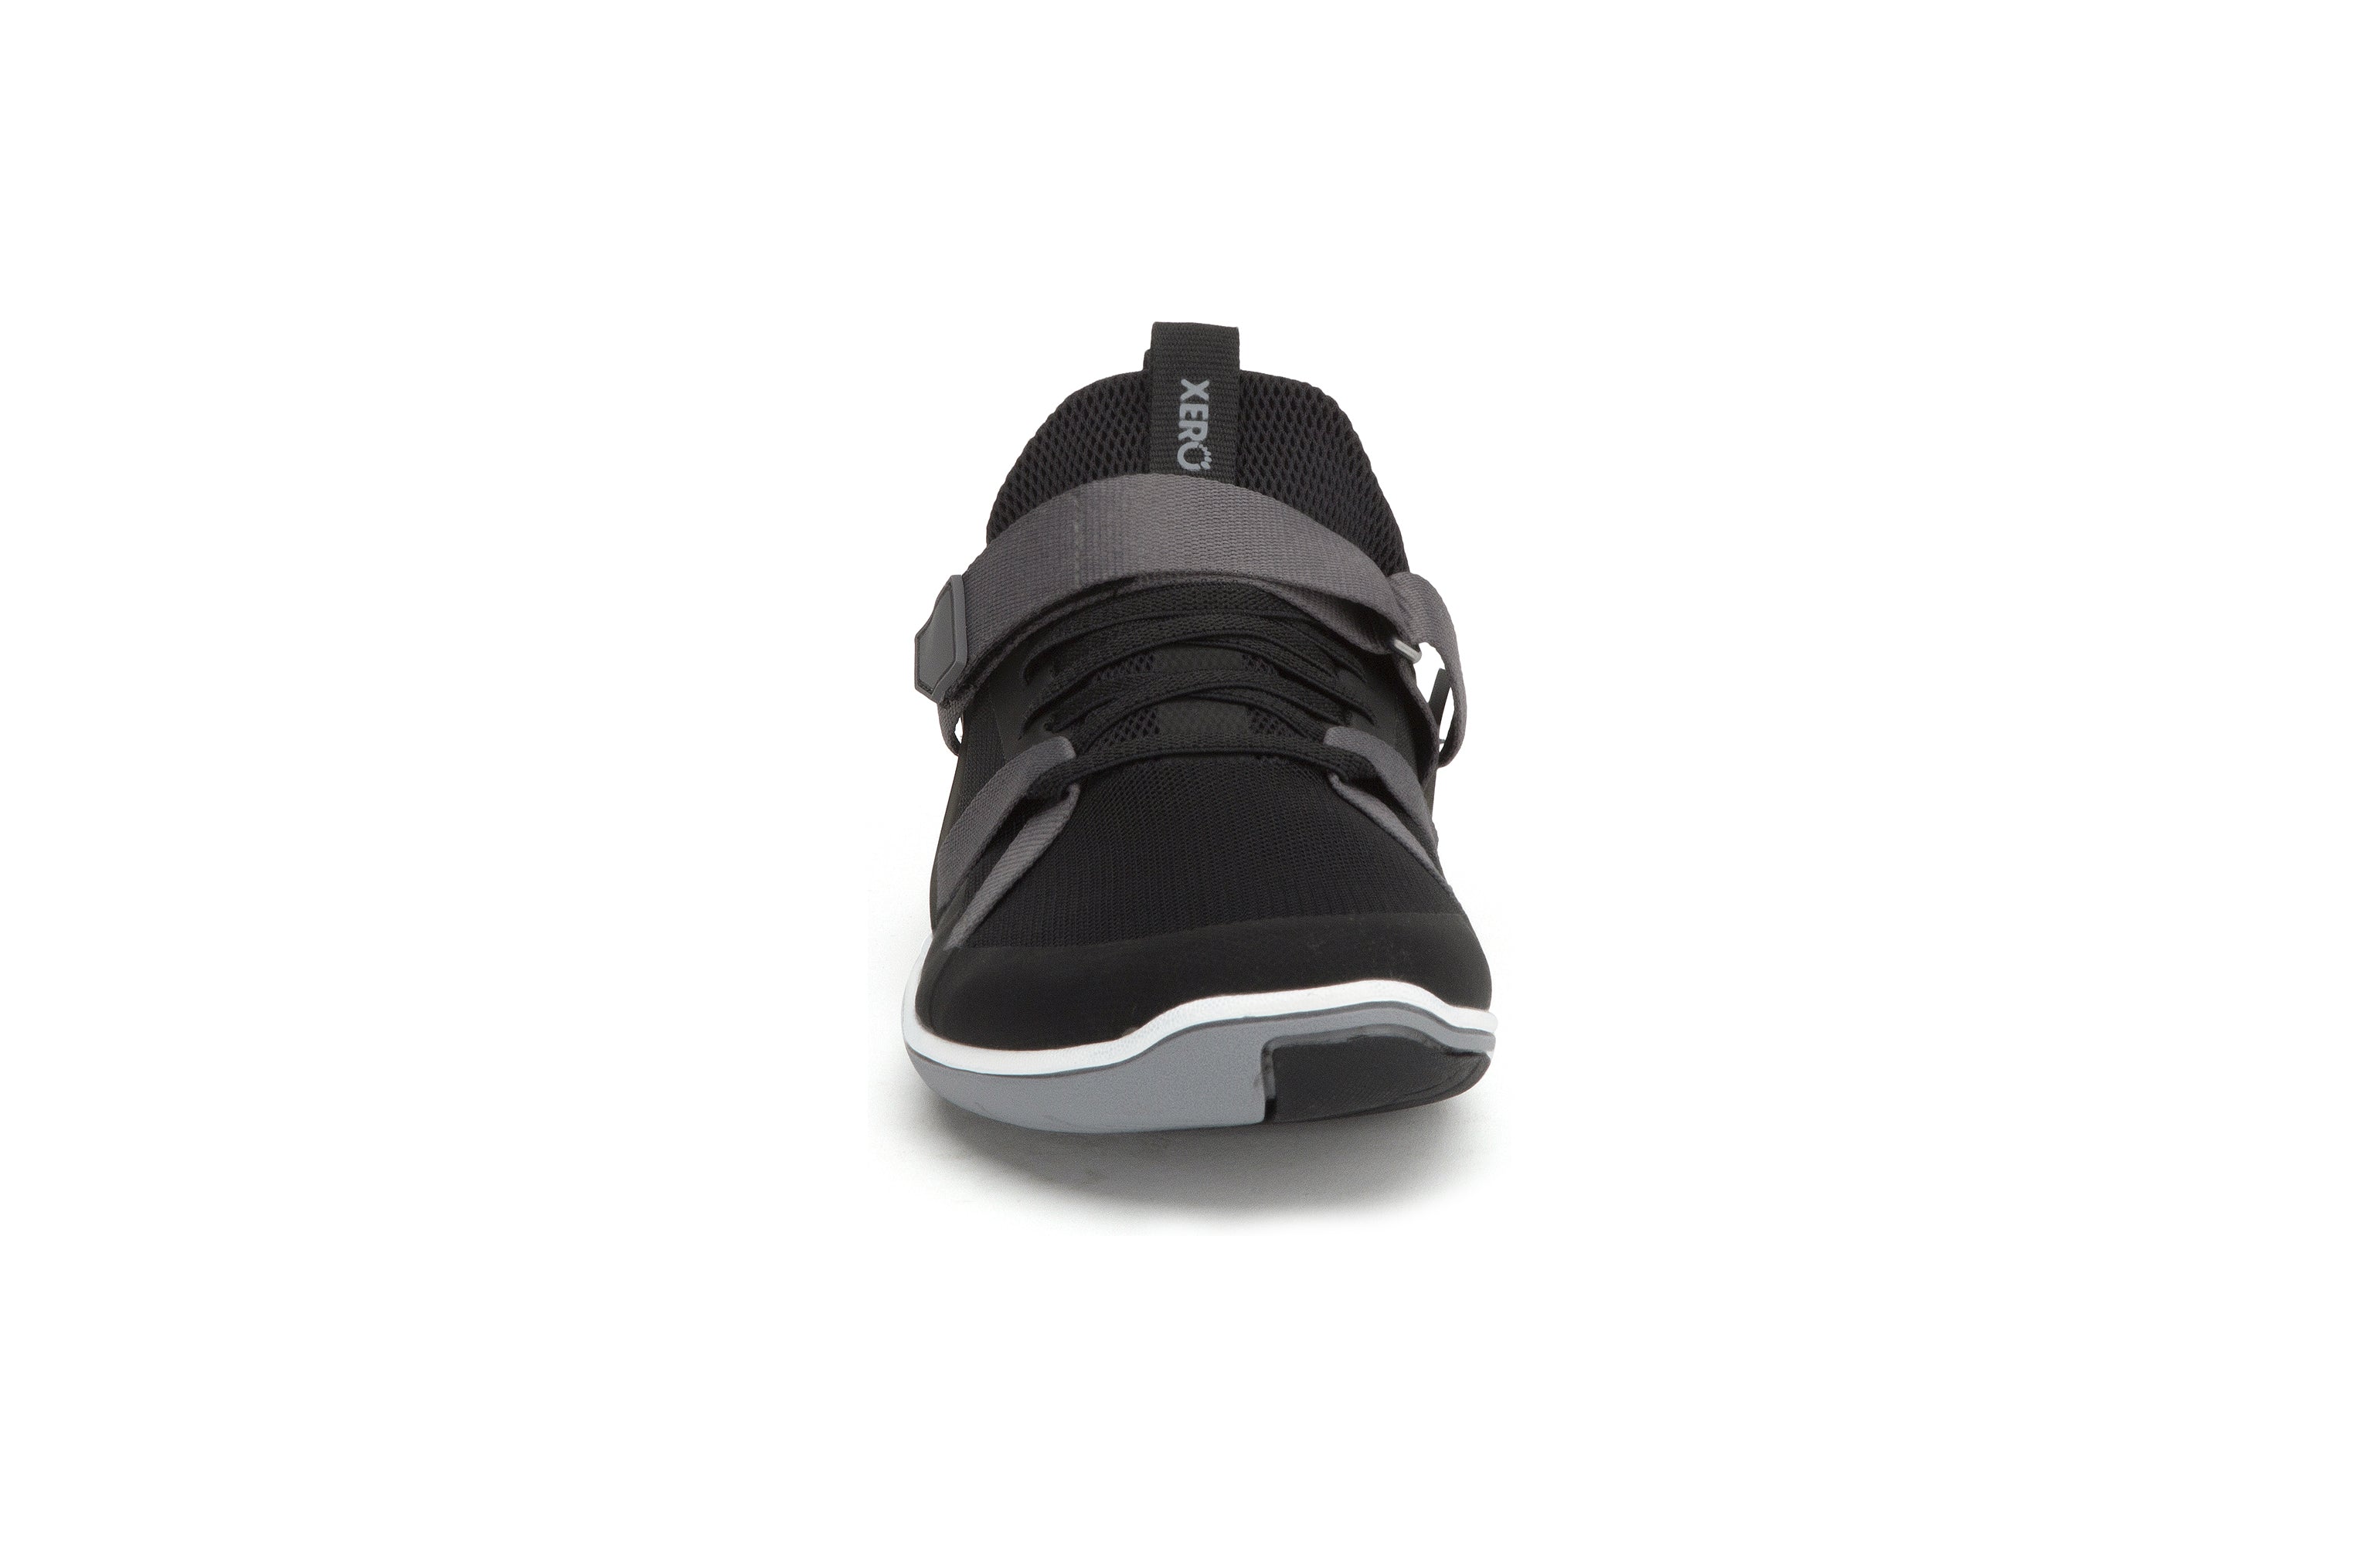 Xero Shoes Forza Trainer Womens barfods træningssko til kvinder i farven black, forfra